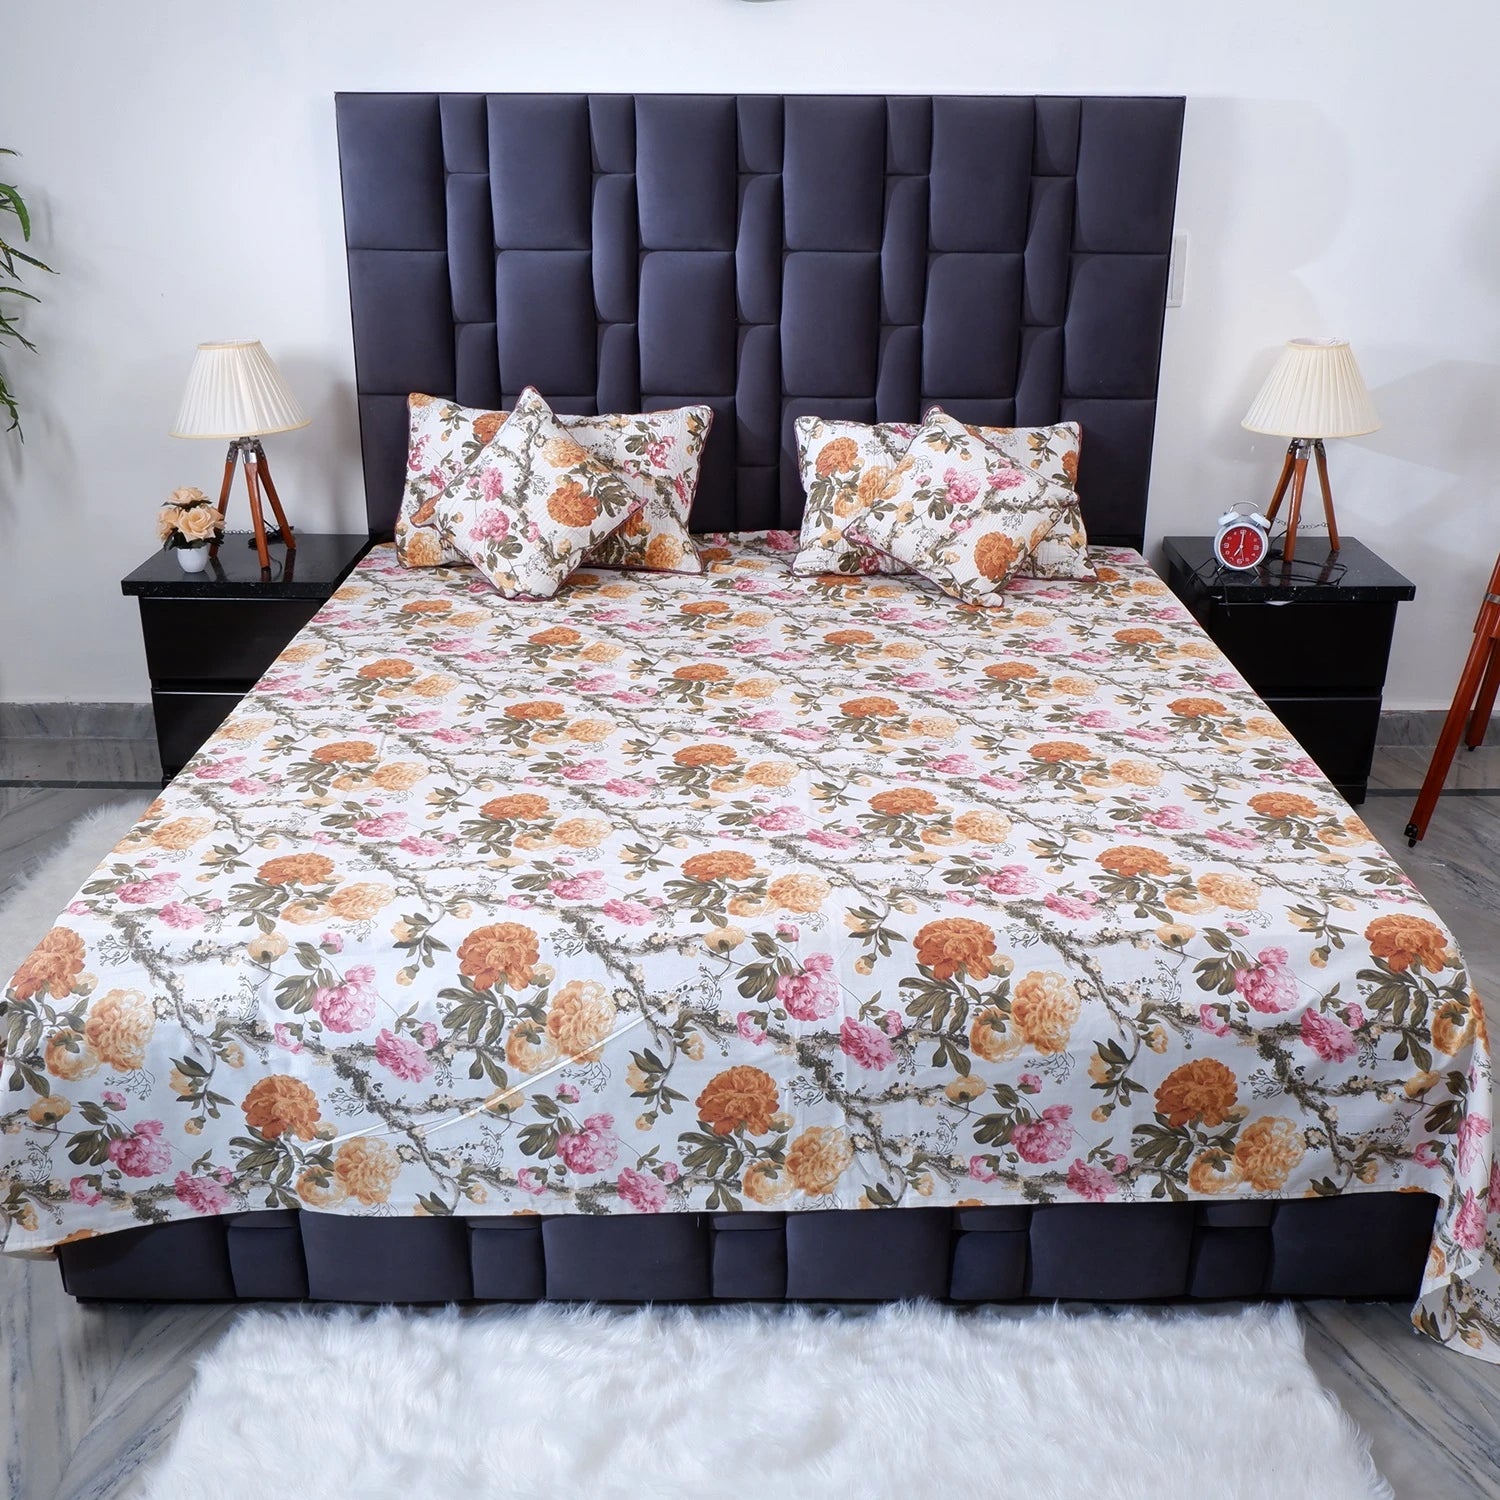 100% Pure Cotton Bed Sheet | Soft Sunny Slumber